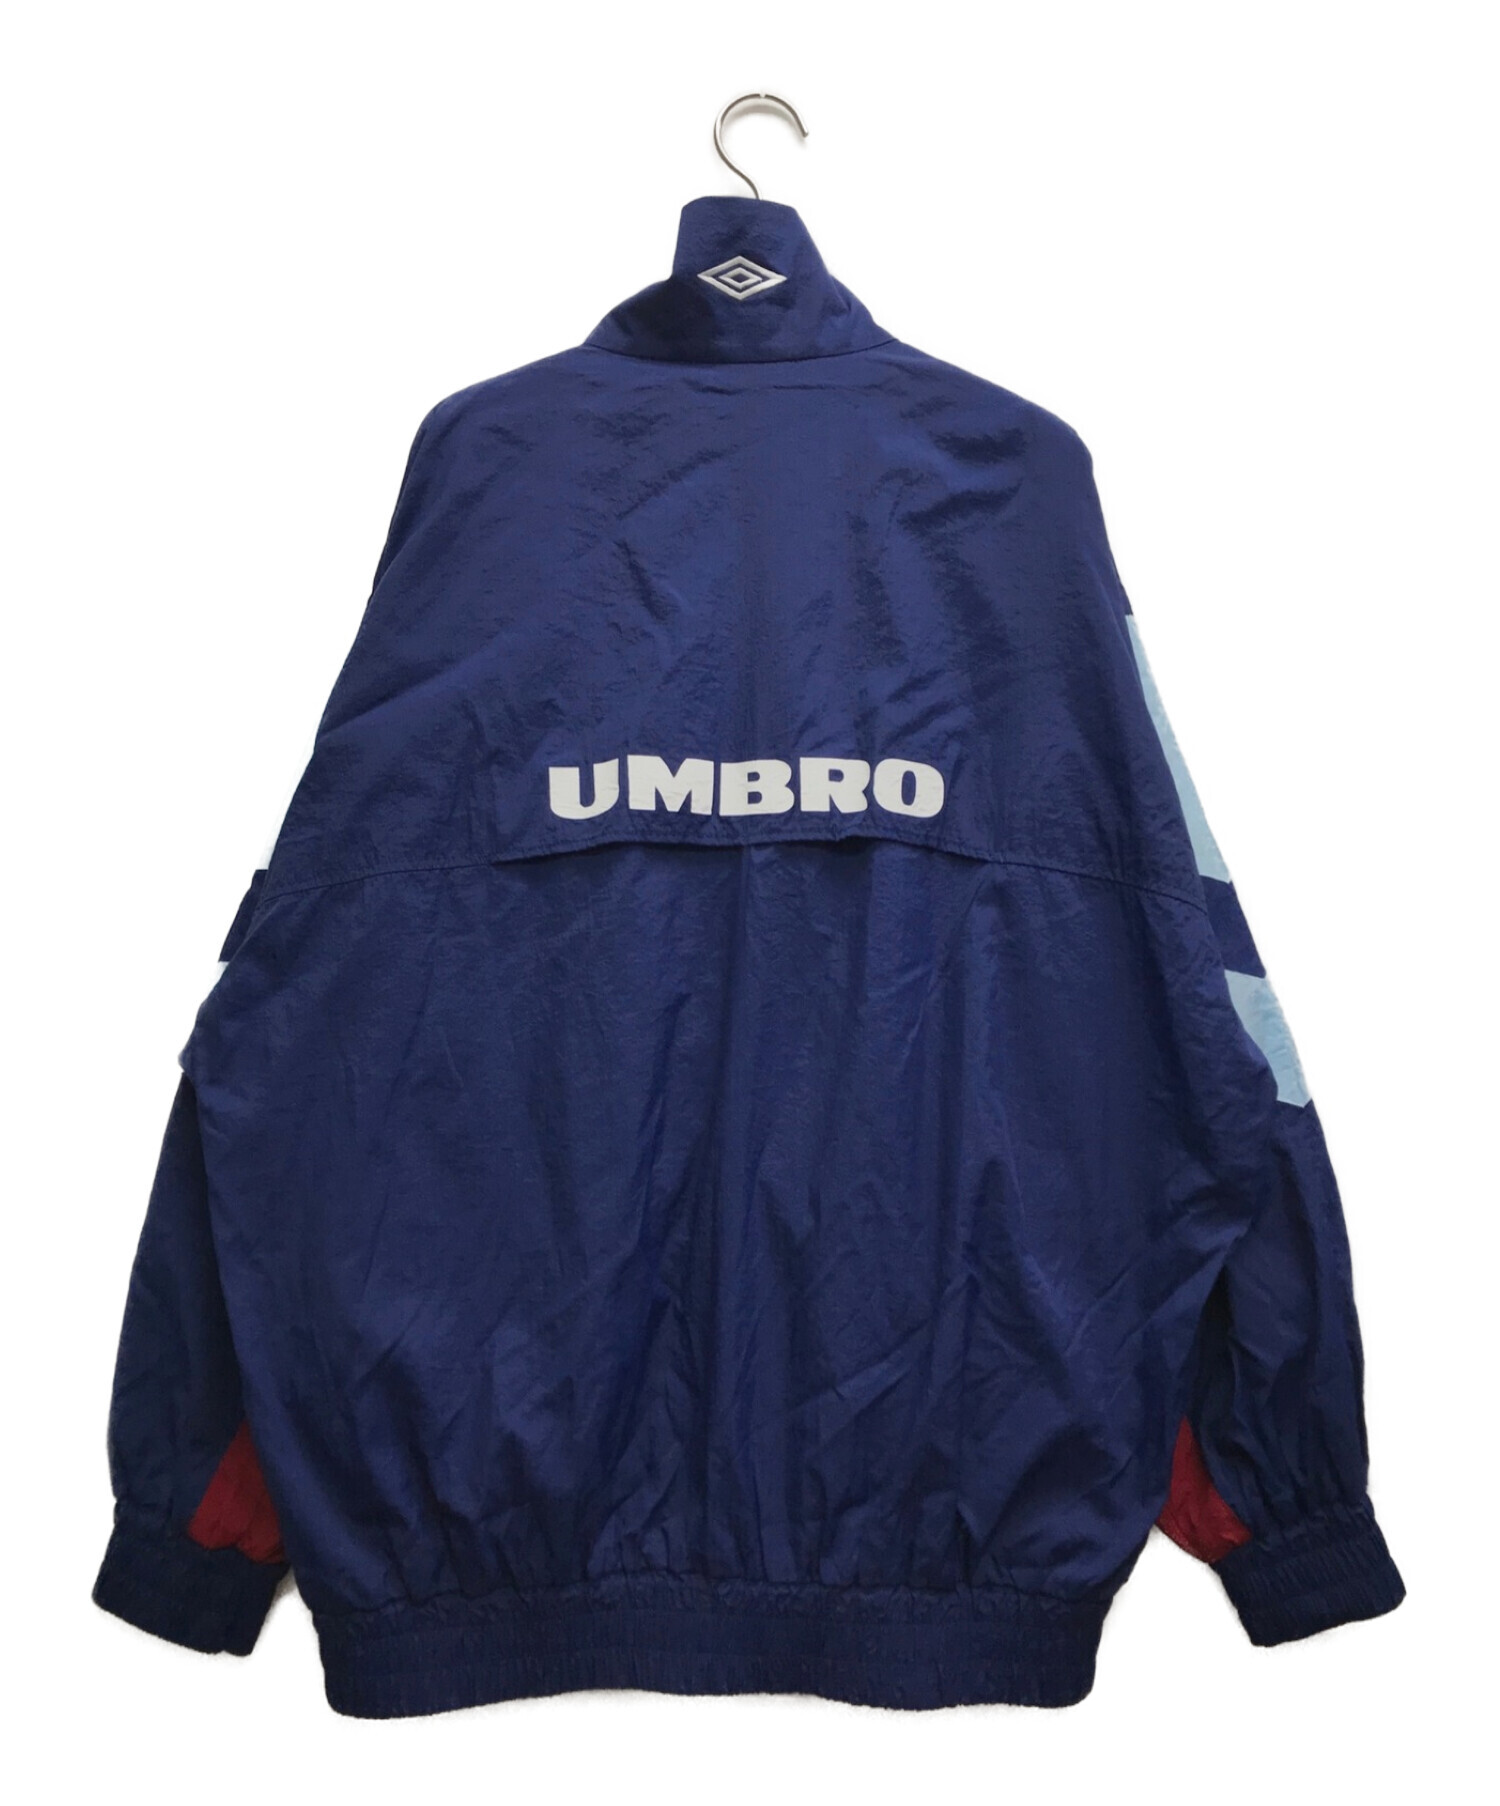 moussy (マウジー) UMBRO (アンブロ) トラックジャケット ブルー サイズ:Free